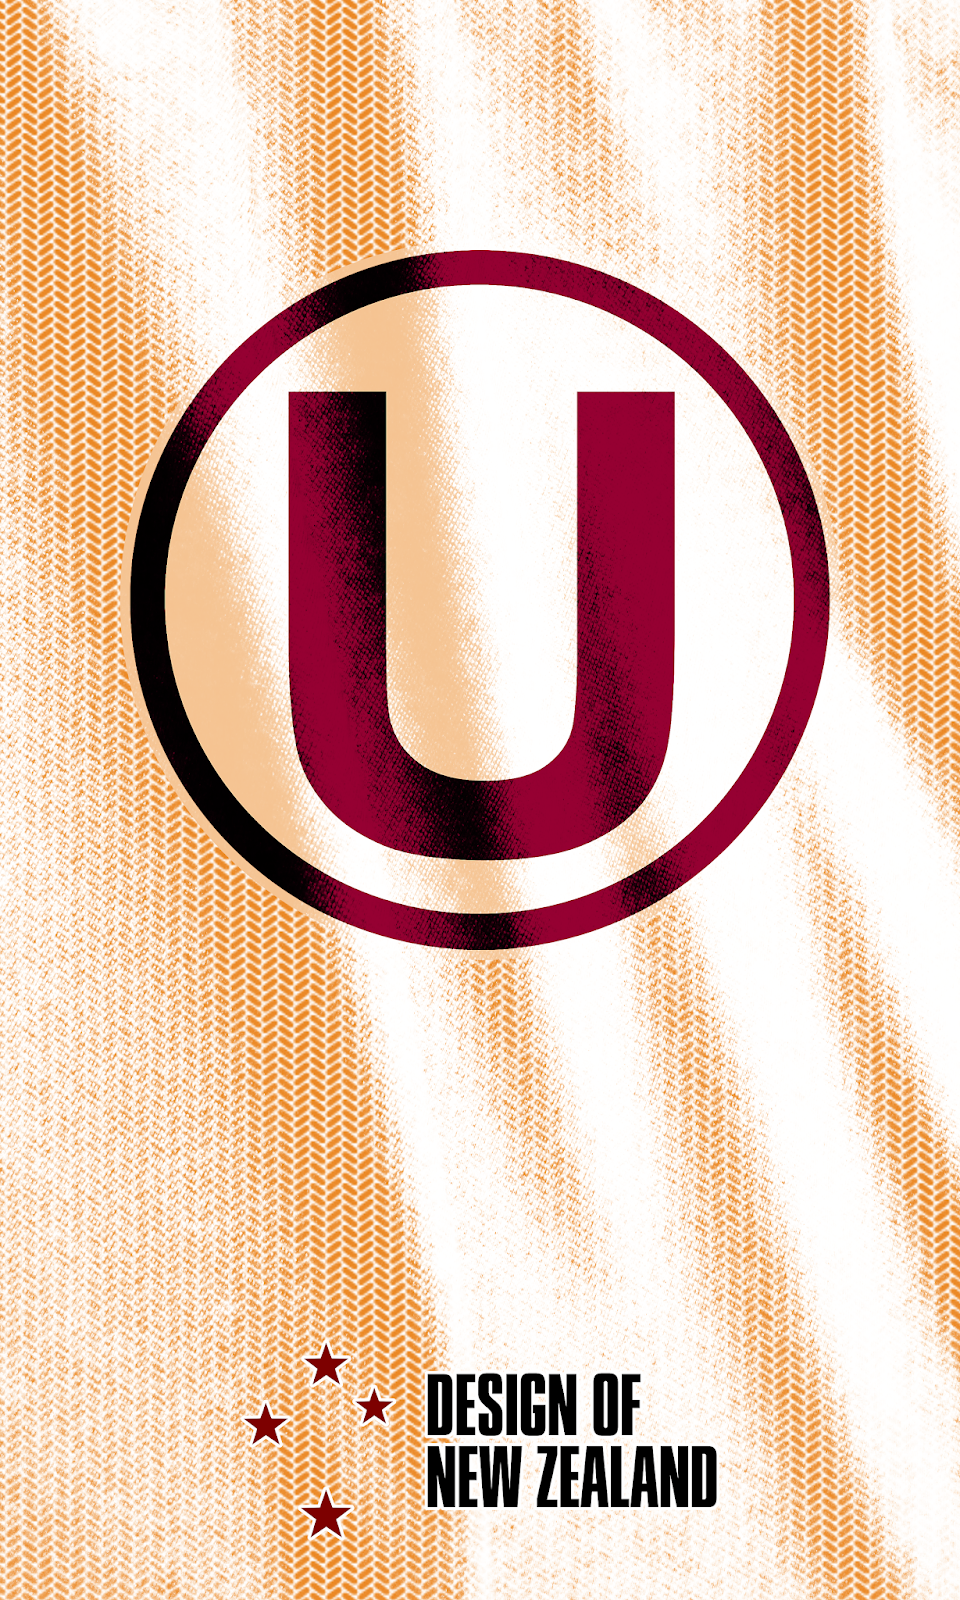 Club Universitario de Deportes. Club universitario, Universitario